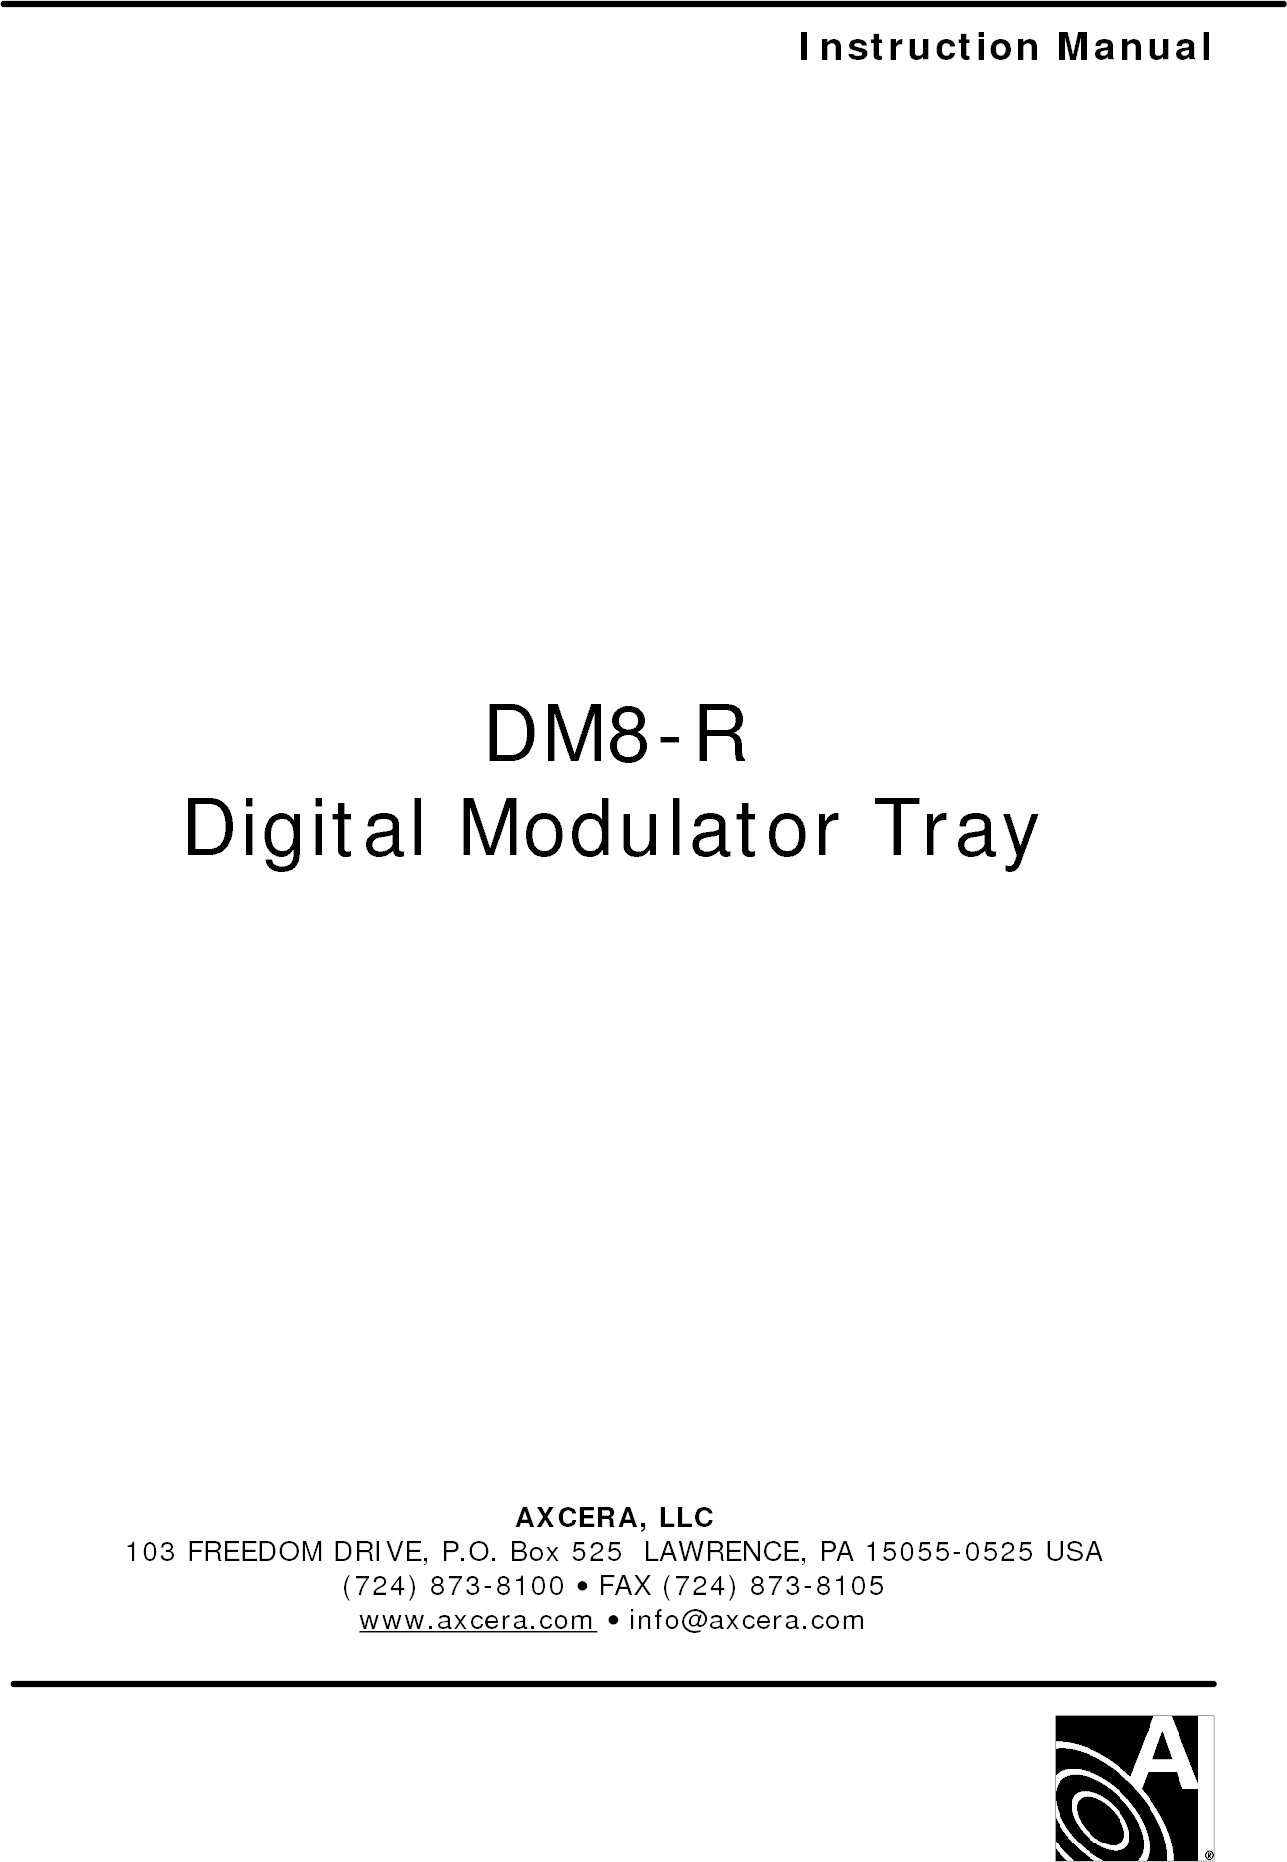    Instruction Manual                 DM8-R Digital Modulator Tray                AXCERA, LLC  103 FREEDOM DRIVE, P.O. Box 525  LAWRENCE, PA 15055-0525 USA (724) 873-8100 • FAX (724) 873-8105 www.axcera.com • info@axcera.com     